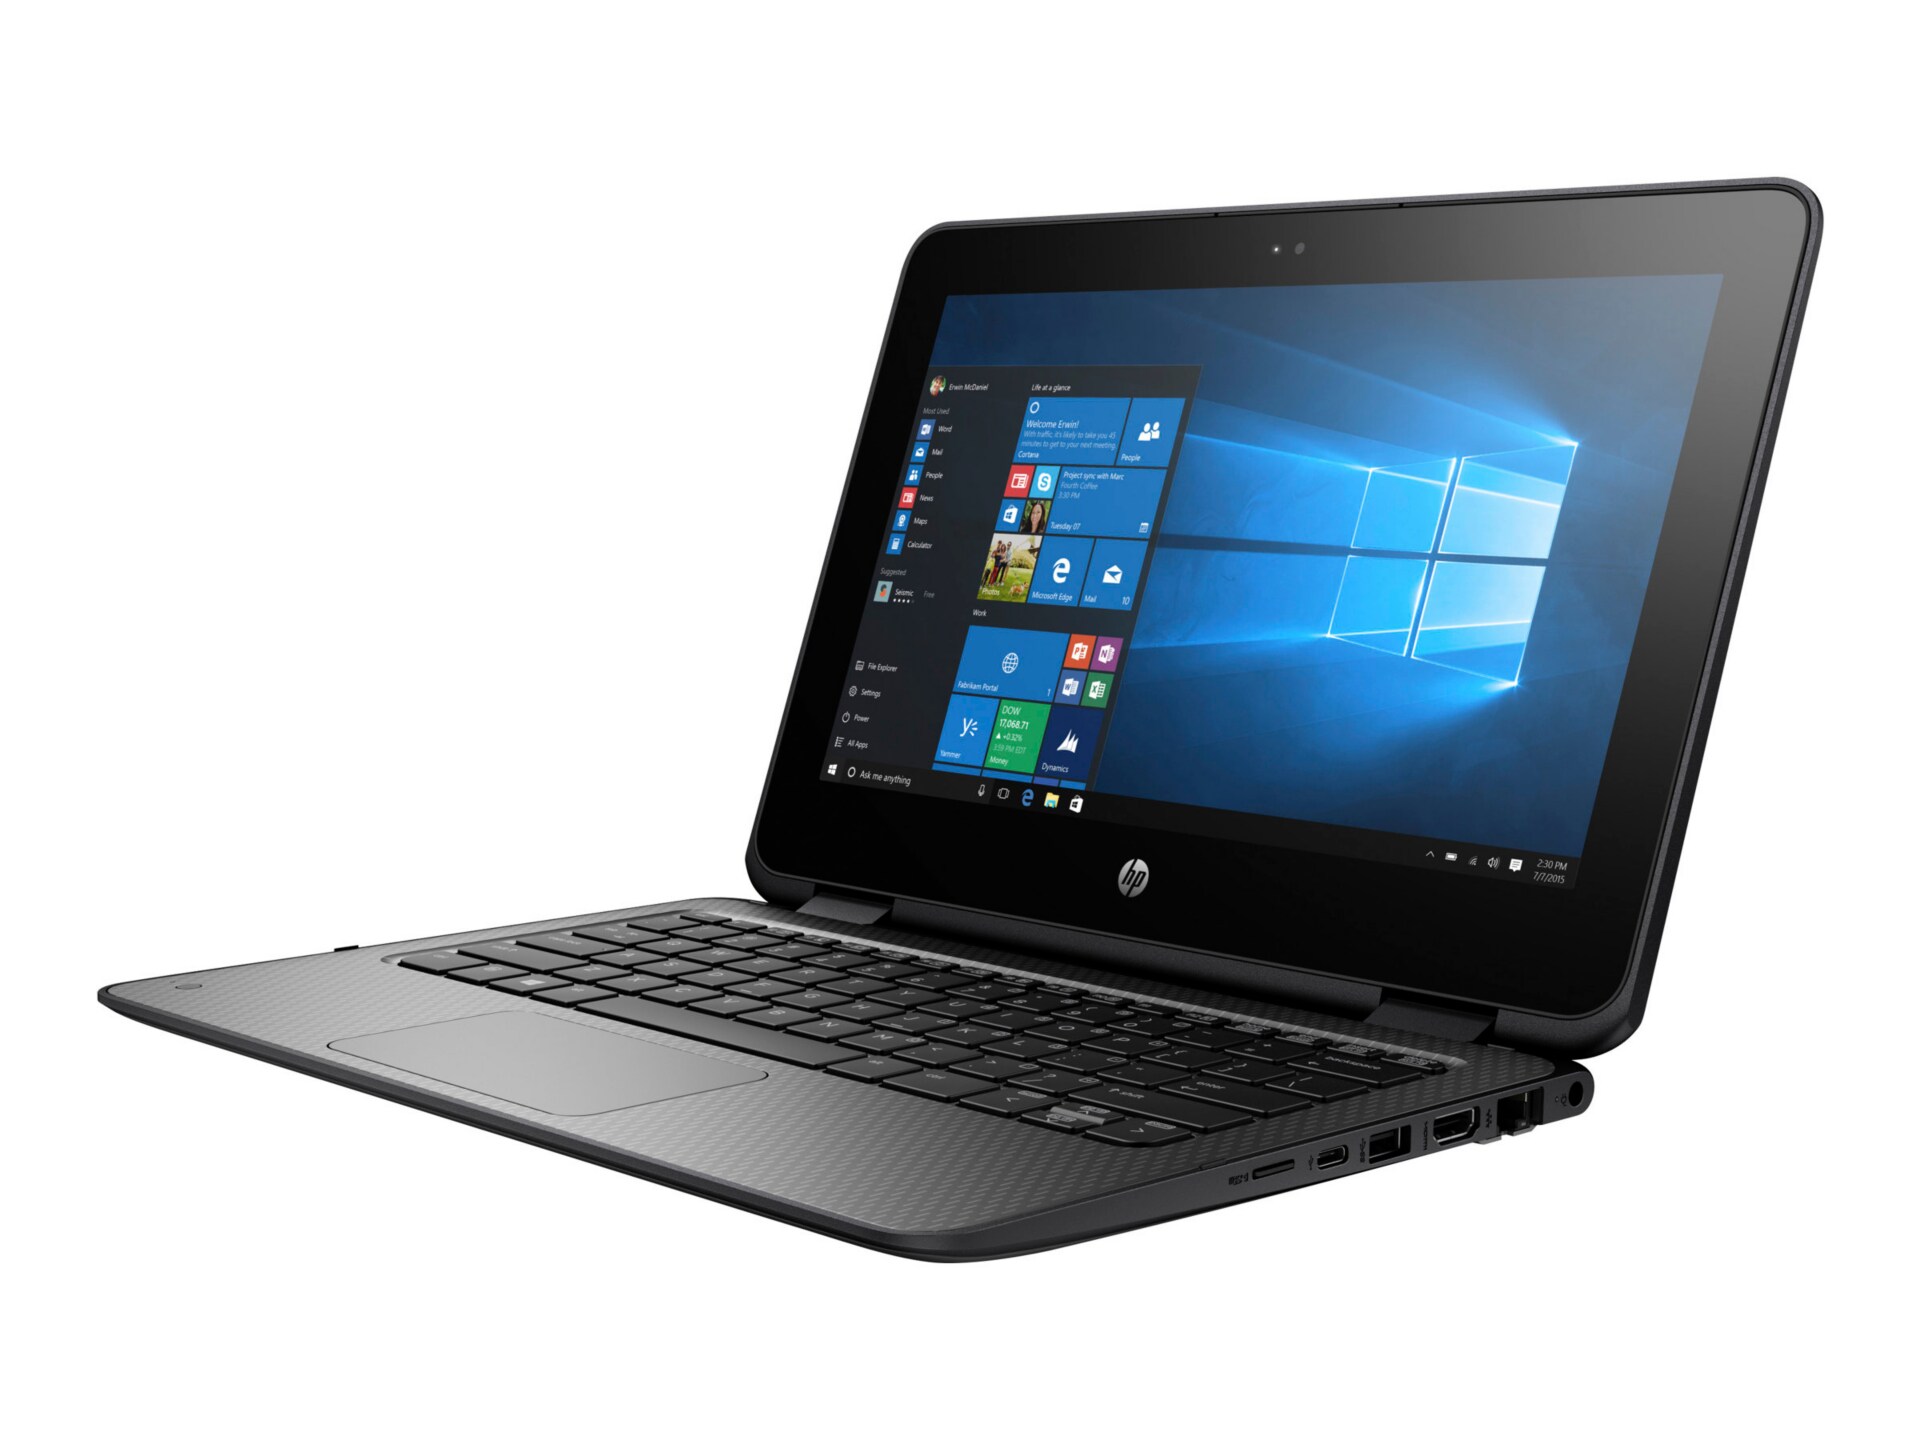 HP ProBook x360 11 G1 - Education Edition - 11.6" - Celeron N3350 - 4 GB RAM - 128 GB SSD - QWERTY US